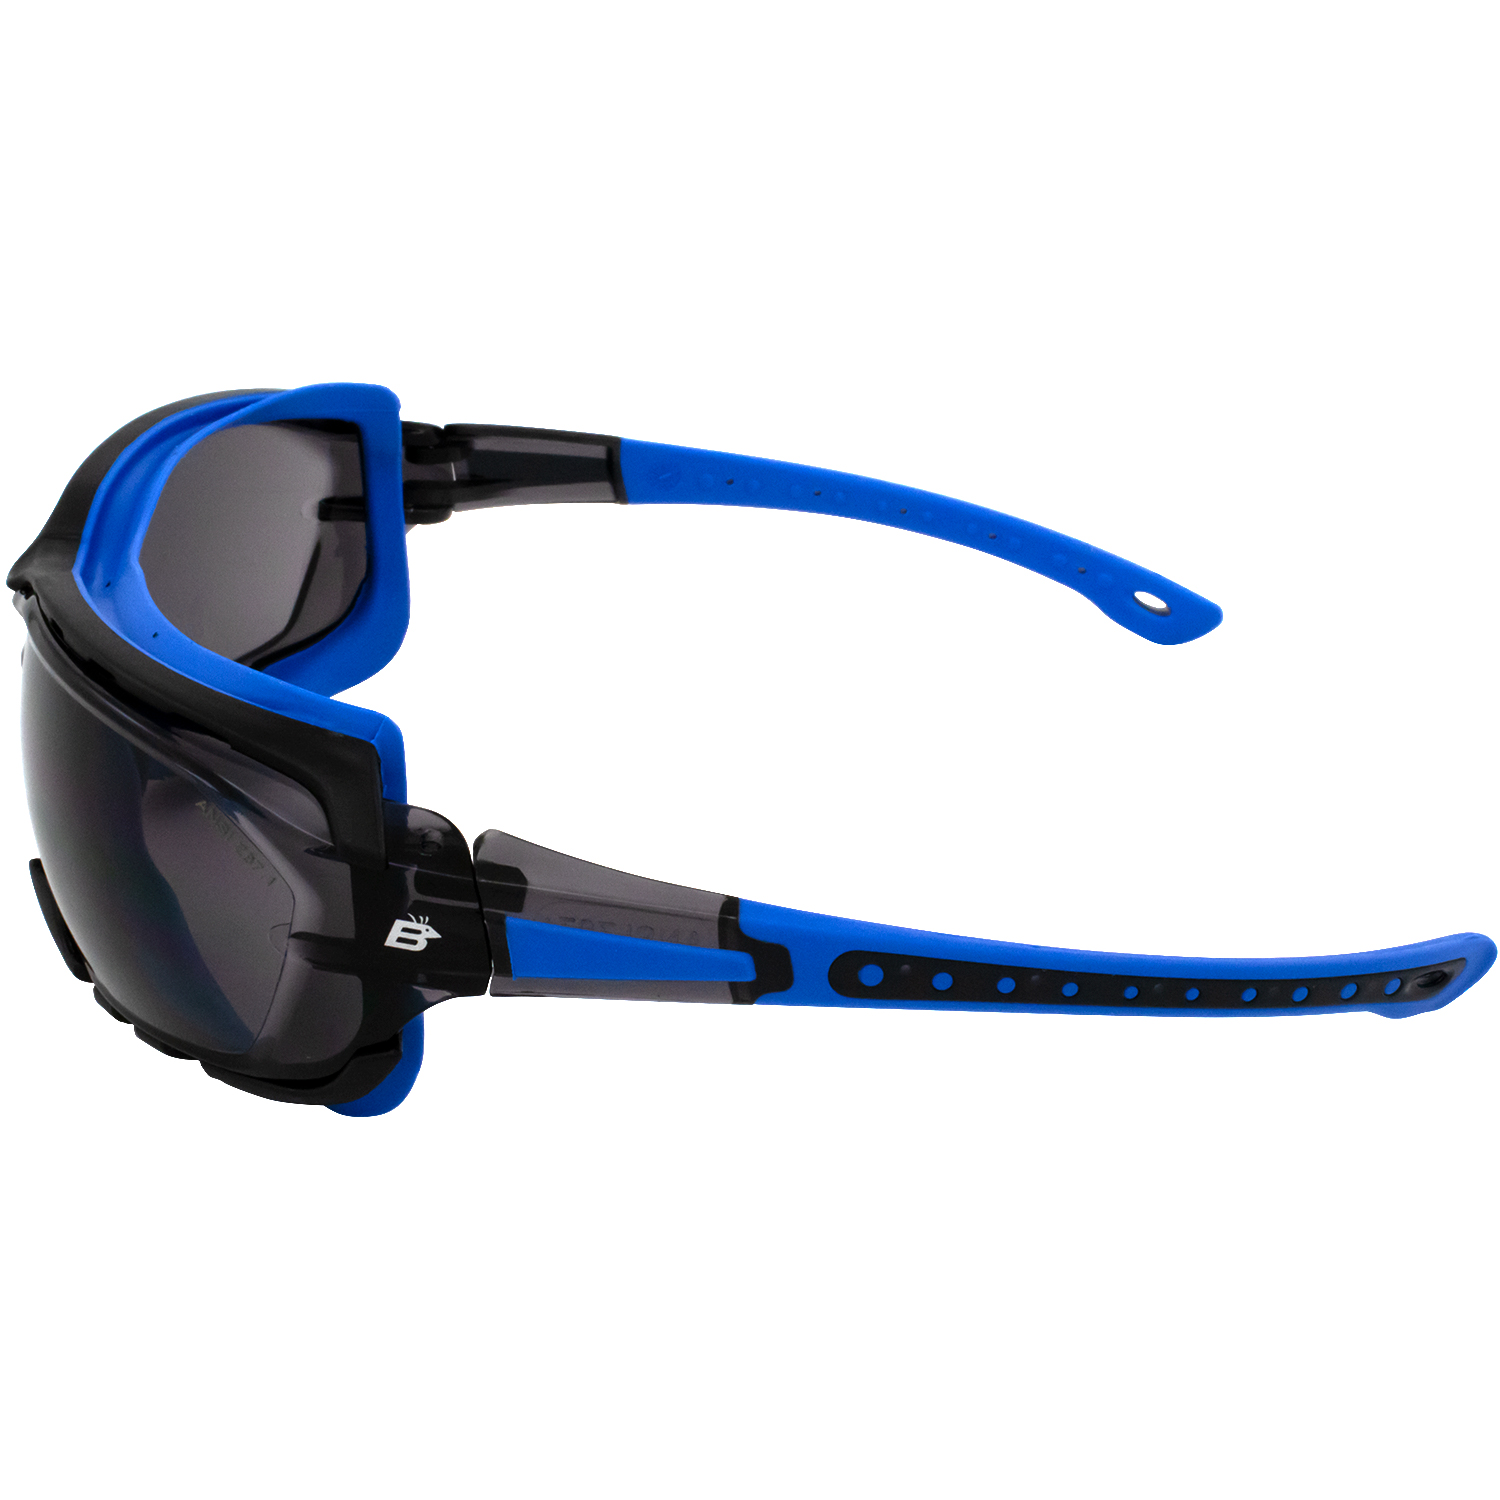 Birdz Eyewear Gasket Safety Padded Motorcycle Sport Sunglasses Blue with Smoke Lens - image 3 of 7